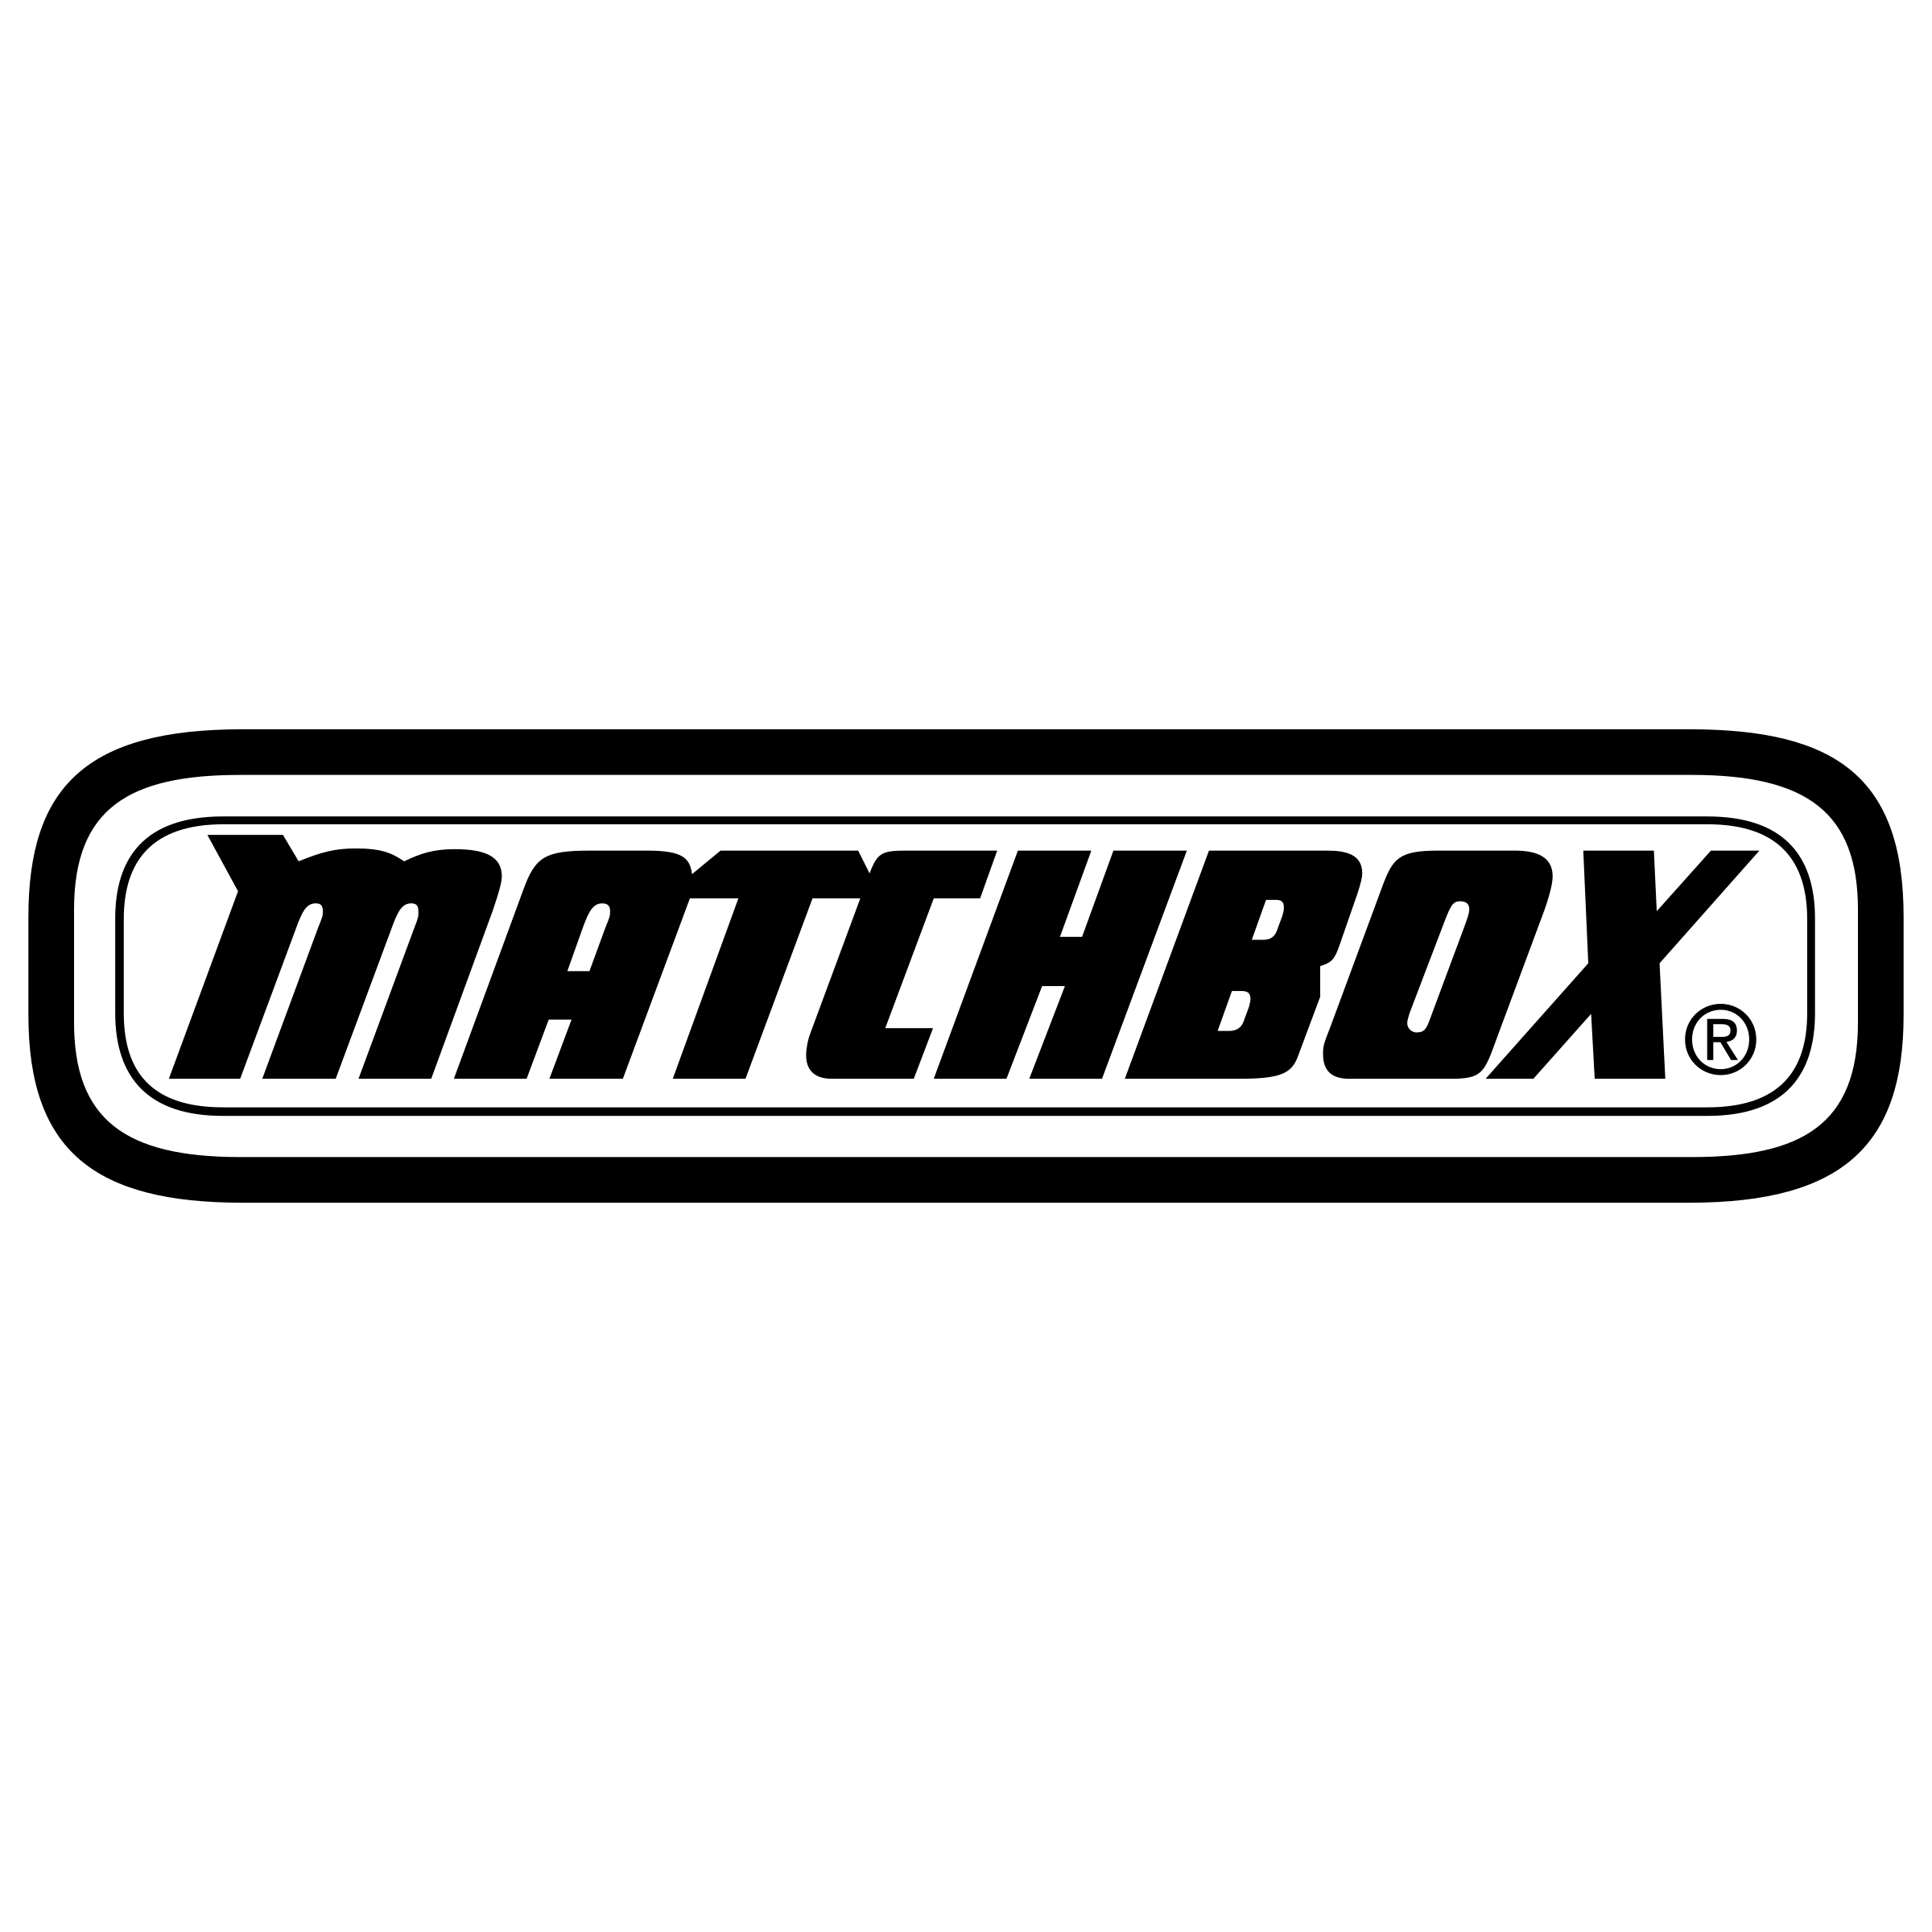 Matchbox Logo - Matchbox Logo PNG Transparent & SVG Vector - Freebie Supply